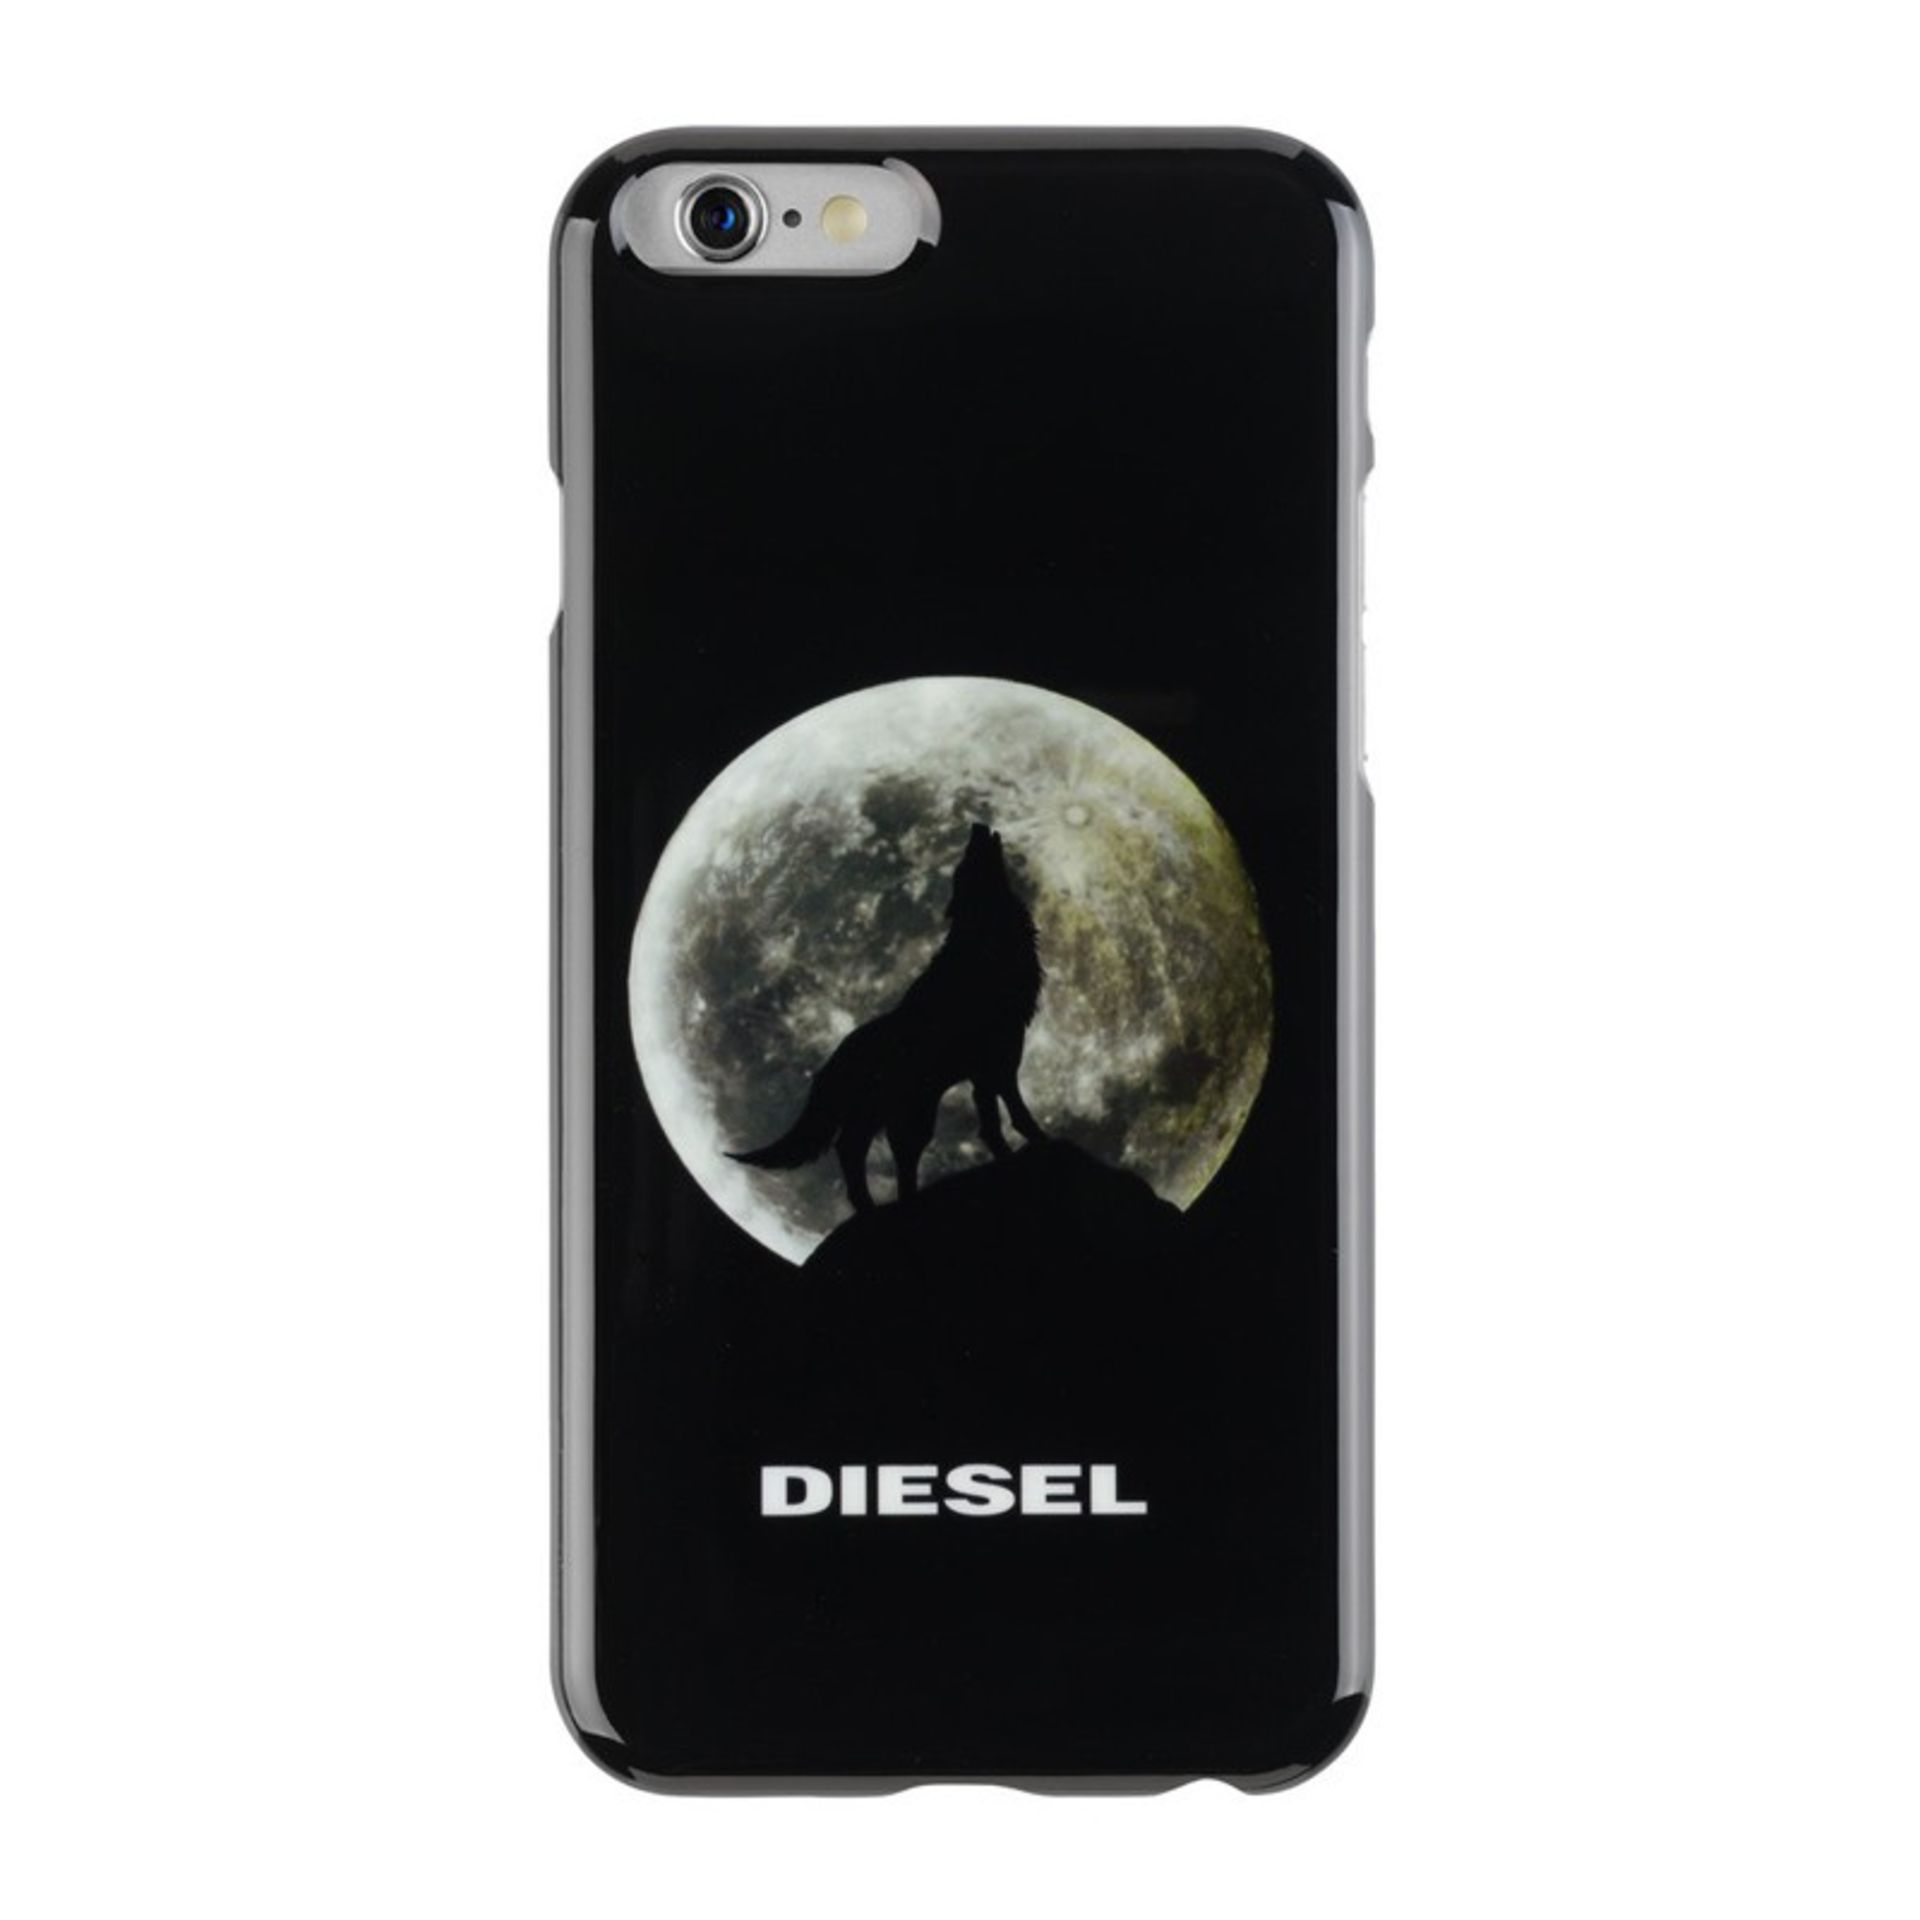 V Brand New Diesel Pluton 6 Hard Snap Case For iPhone 6 ISP Price 19.90 Euros